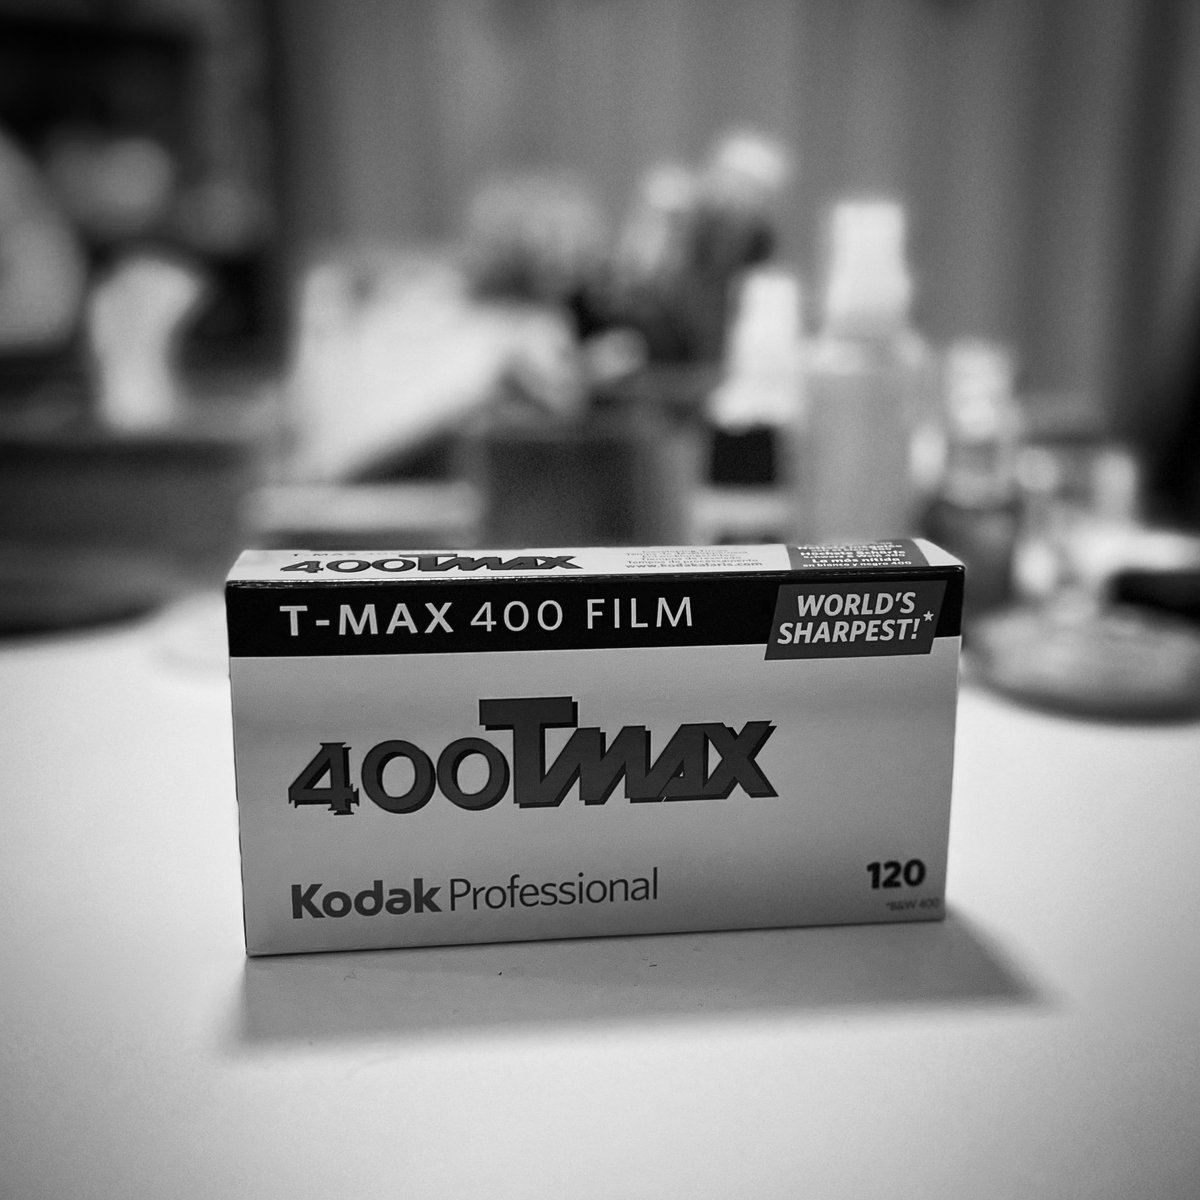 T - MAX 400 FILM

作品作りで使用予定 📷😬👍

#TMAX400
#Kodak
#モノクロフィルム
#120film
#ブローニー
#blackandwhitefilm
#スナップ写真
#snapshot
#streetsnap
#写真好きな人と繋がりたい
#キリトリセカイ
#iPhone13
#京都
#kyoto